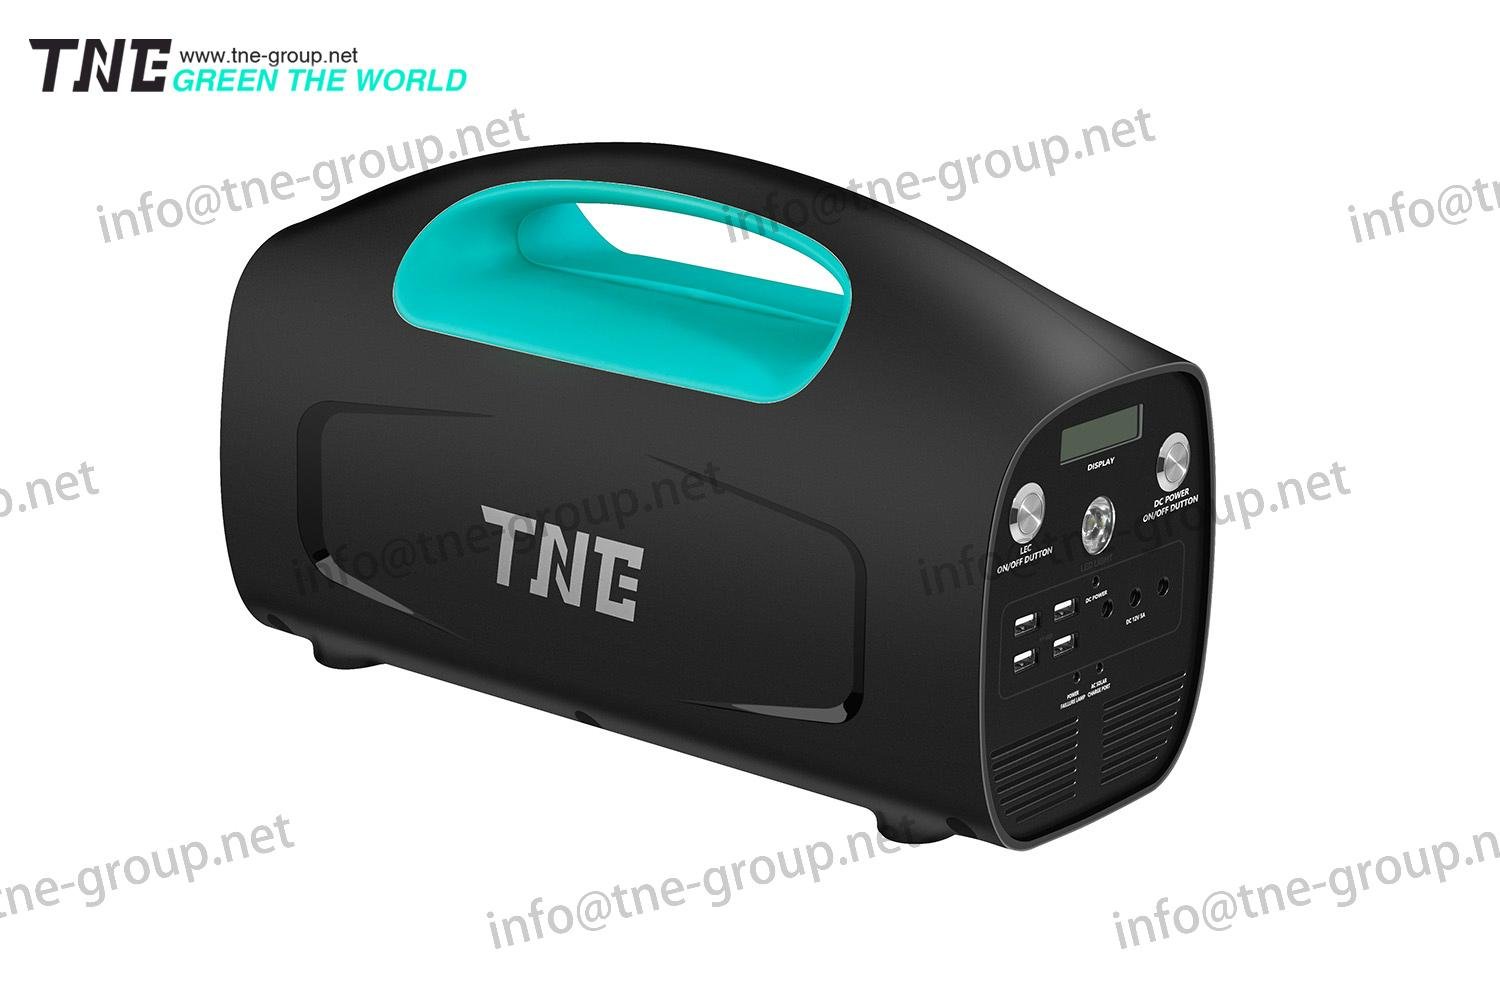 TNE solar online homage ups portable generator power bank 2